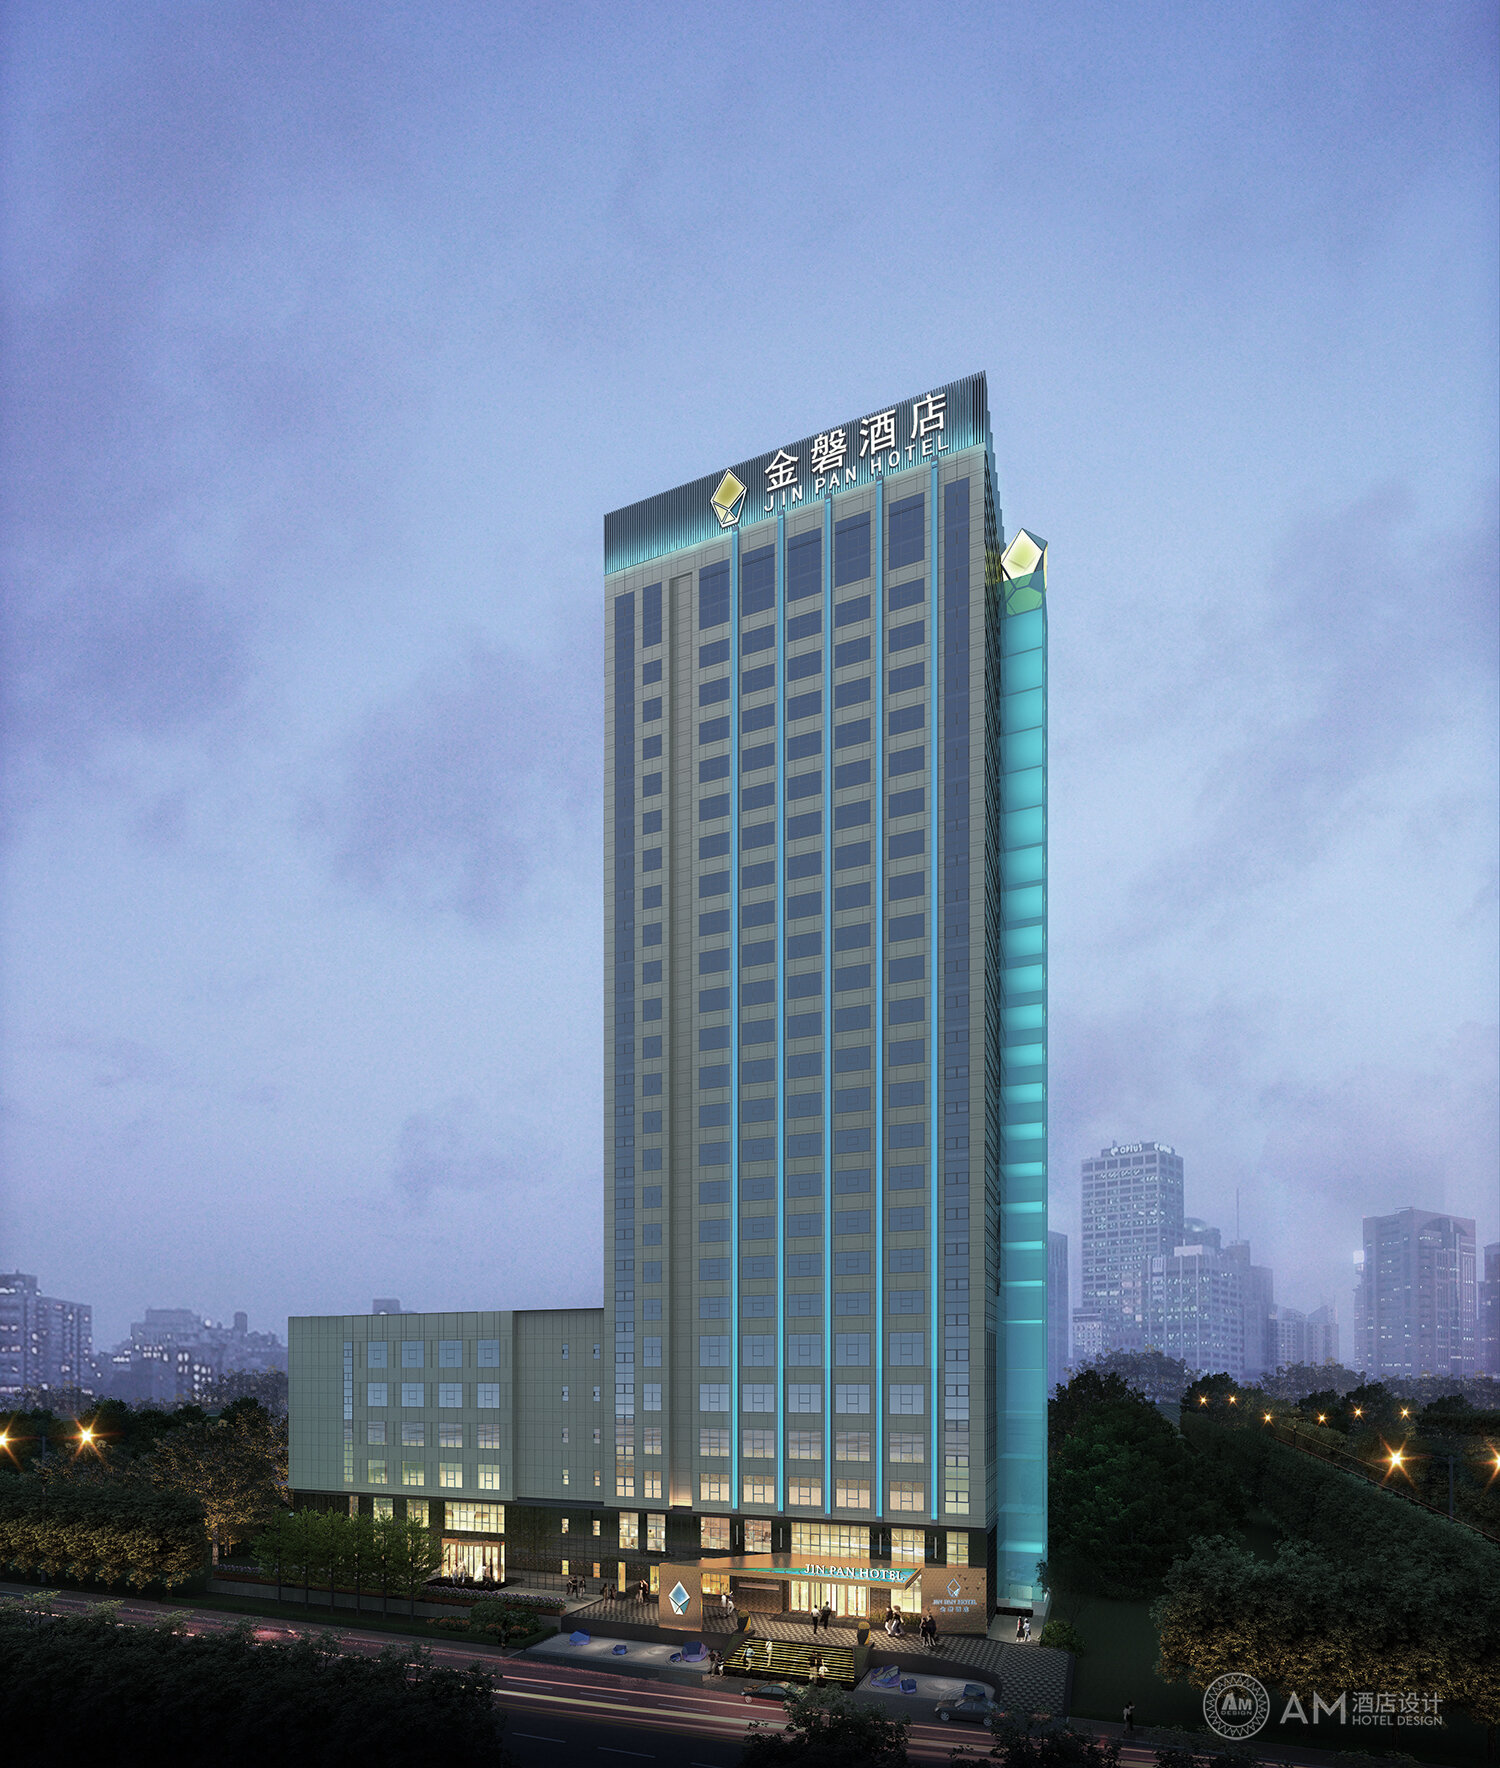 AM DESIGN | Jinpan hotel building Design